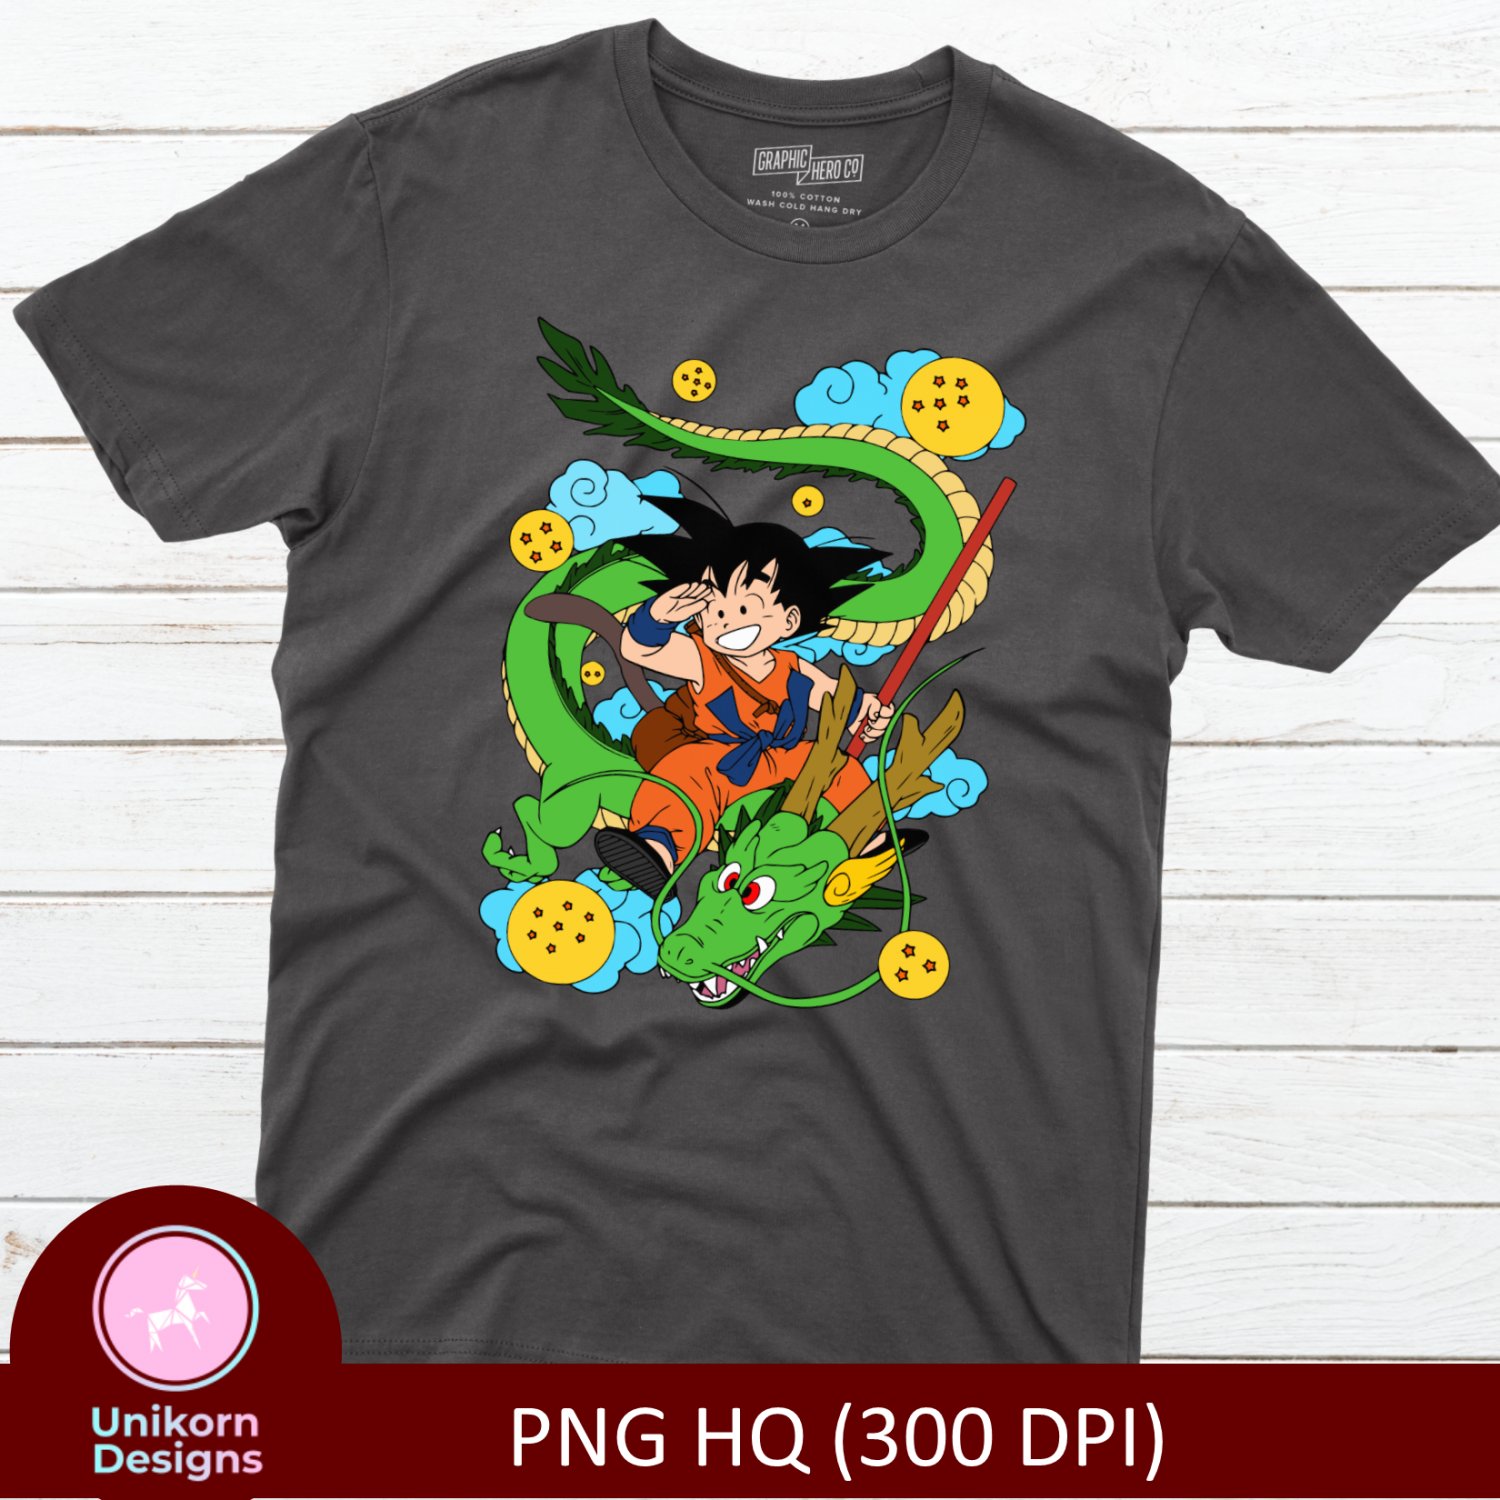 Dragon Ball Z D1 Gohan Tee Shirt Design Graphic Instant Download Transfer